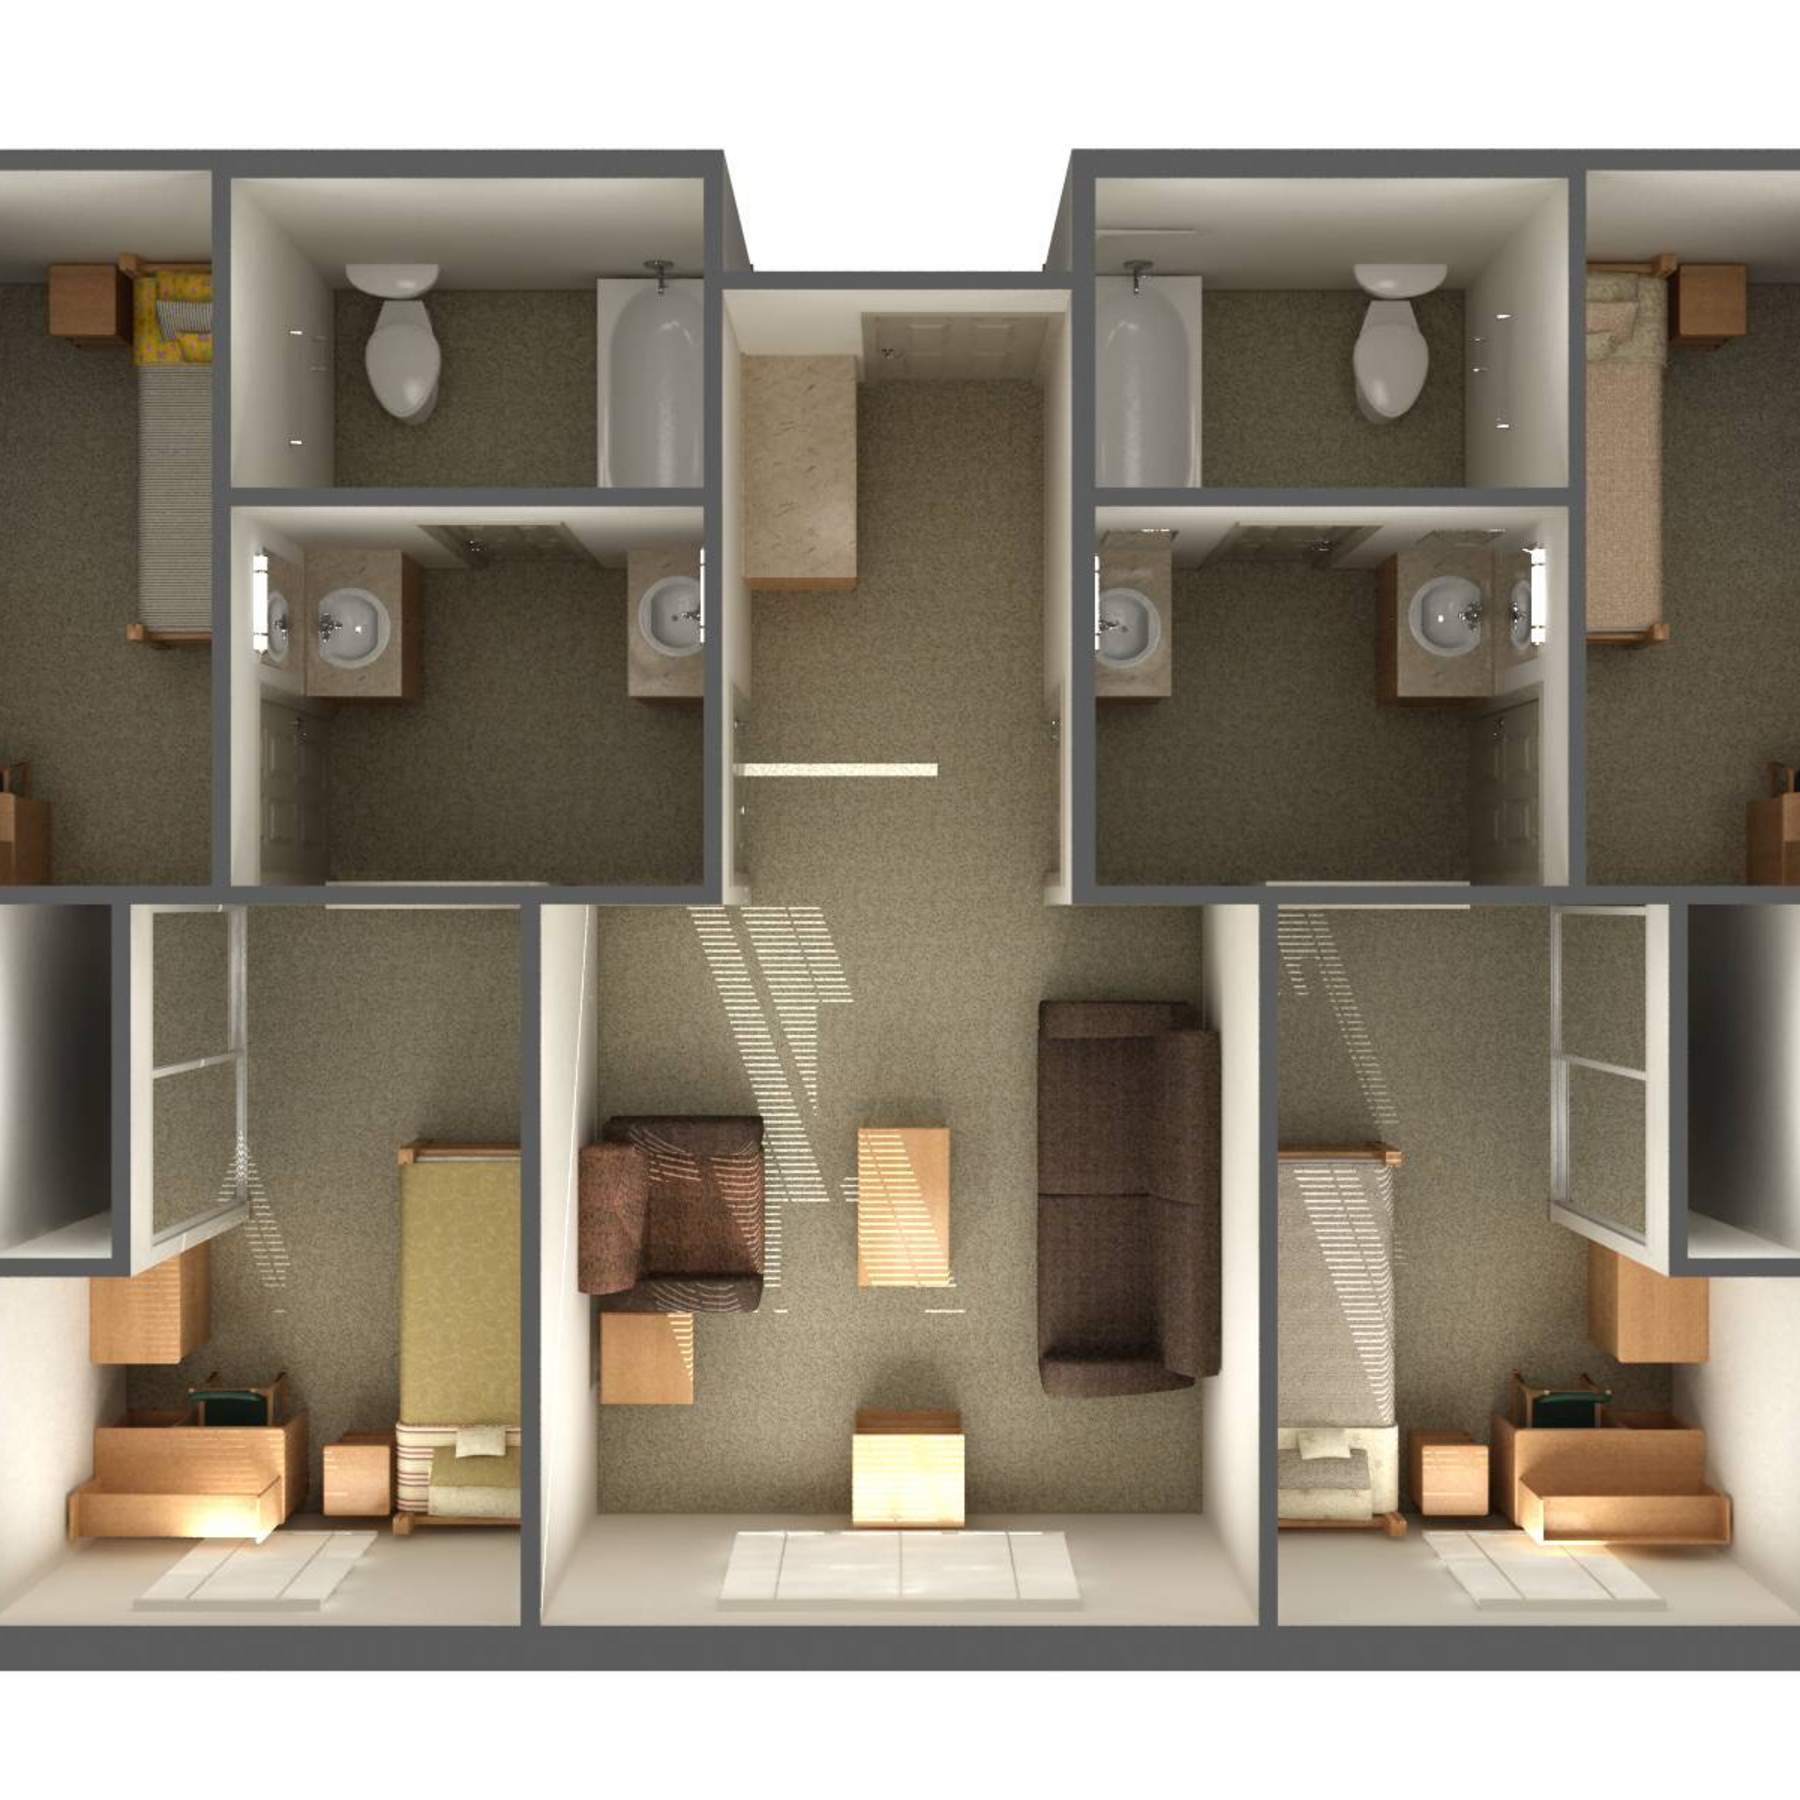 San Jacinto suite layout